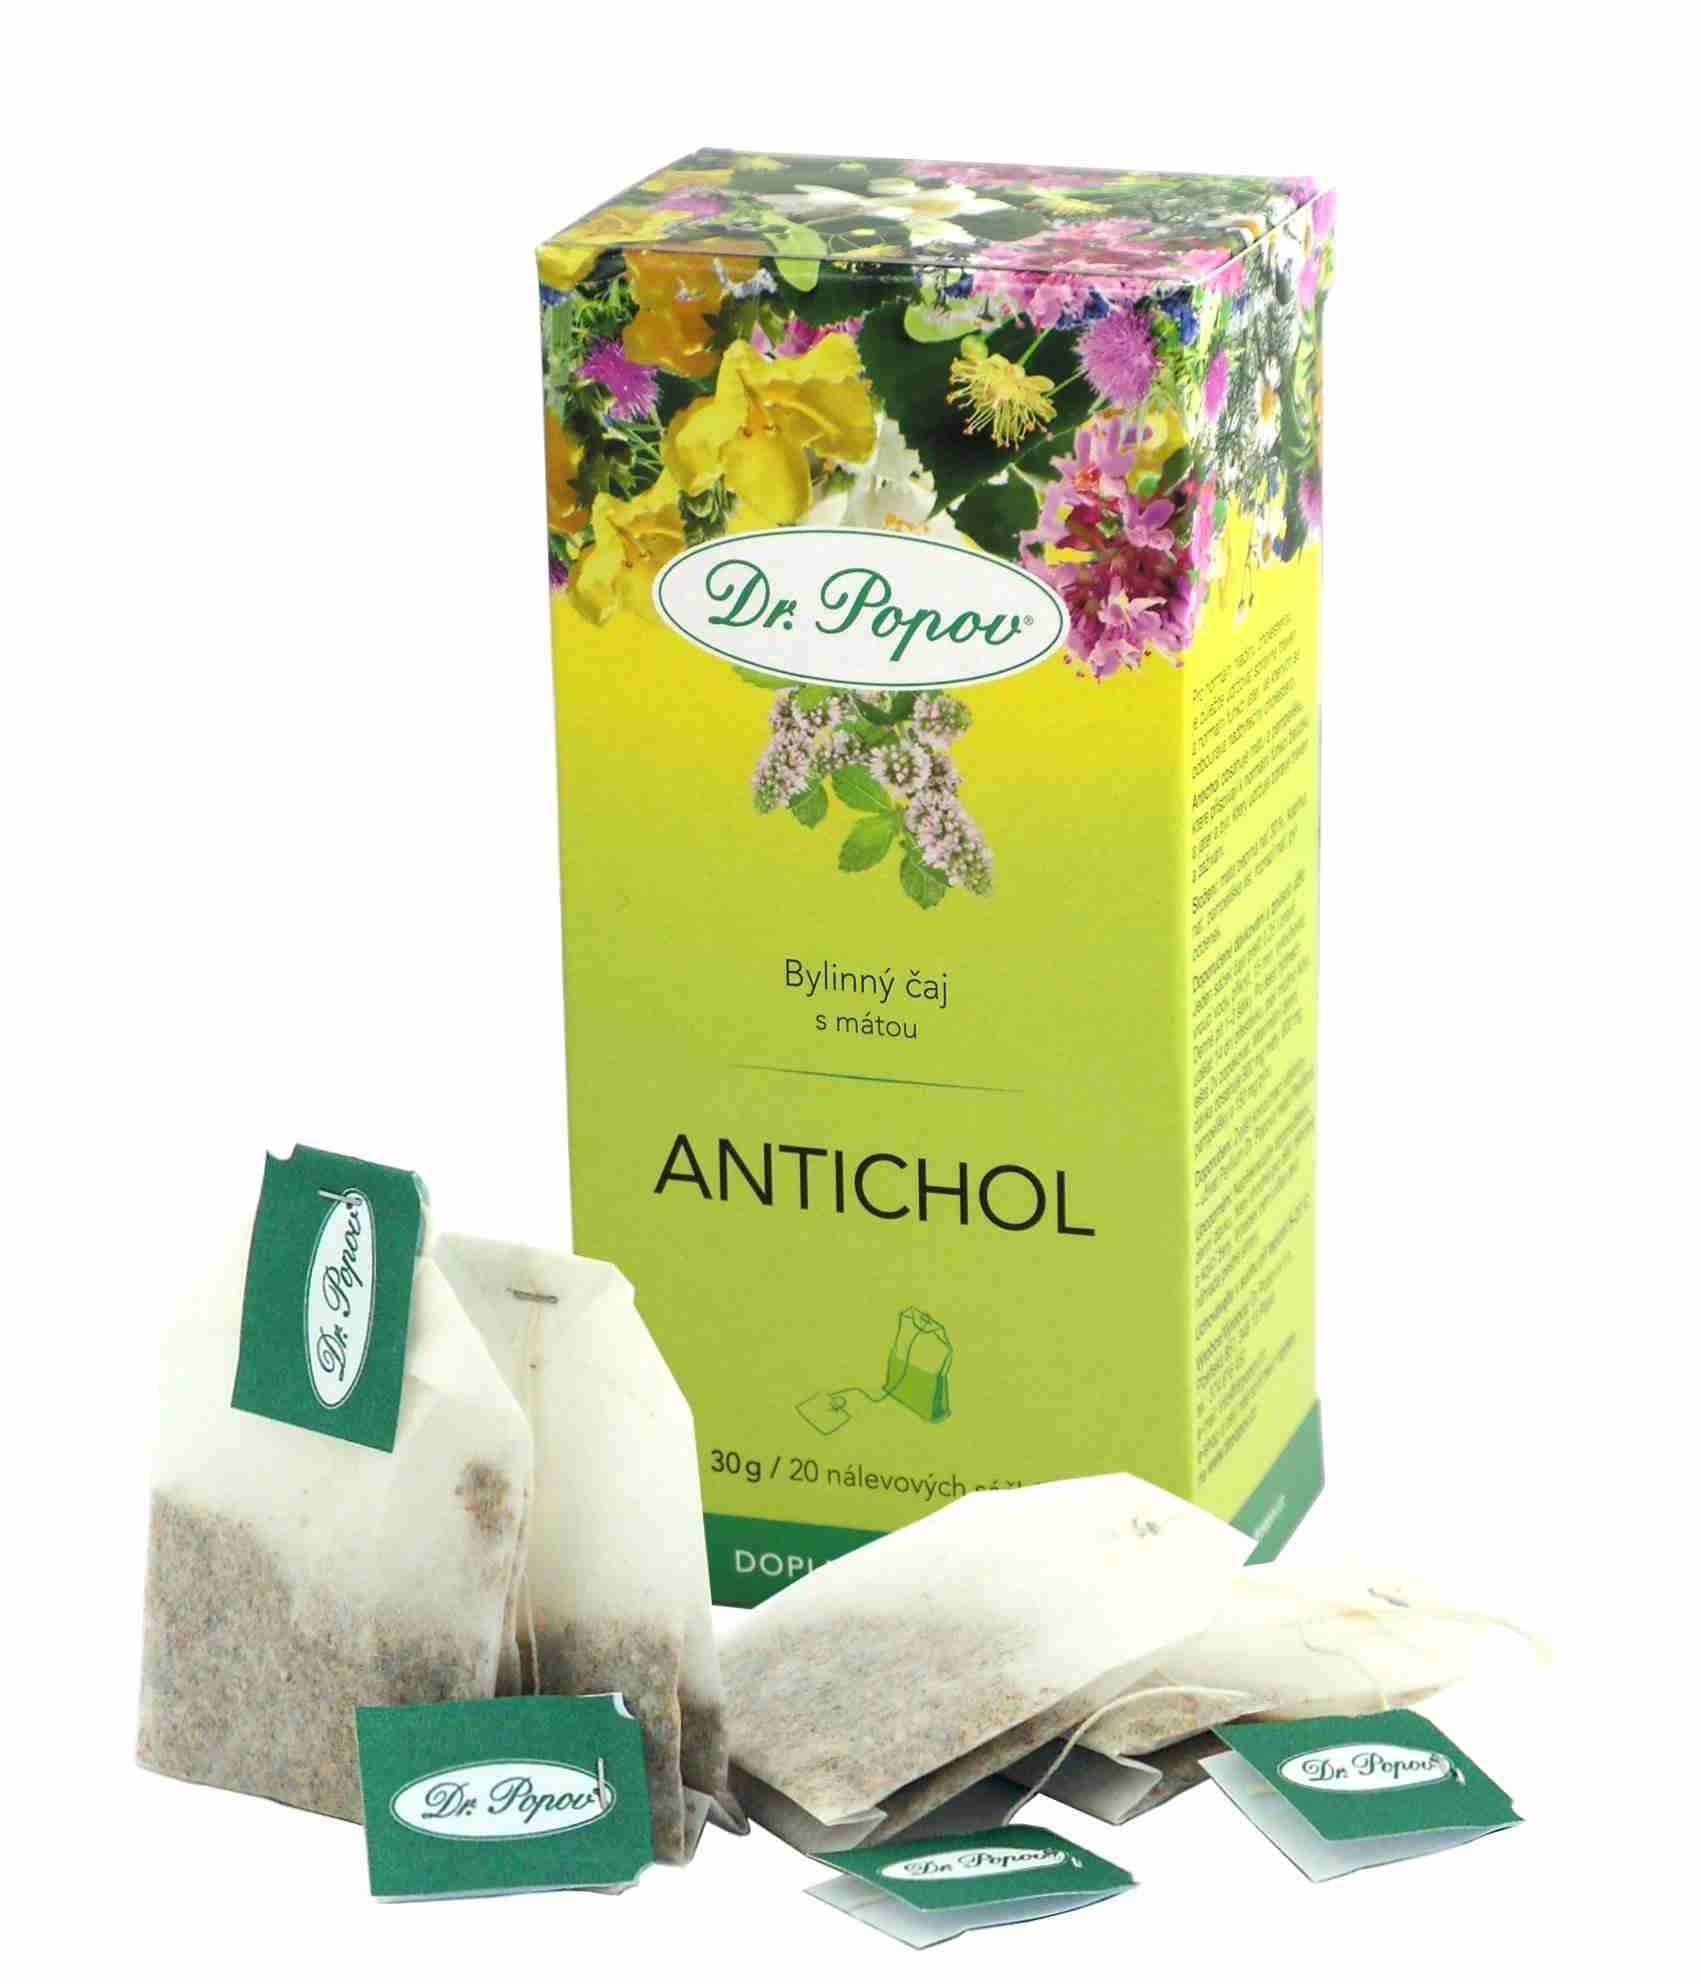 Dr. Popov Antichol tea 20 n.s.